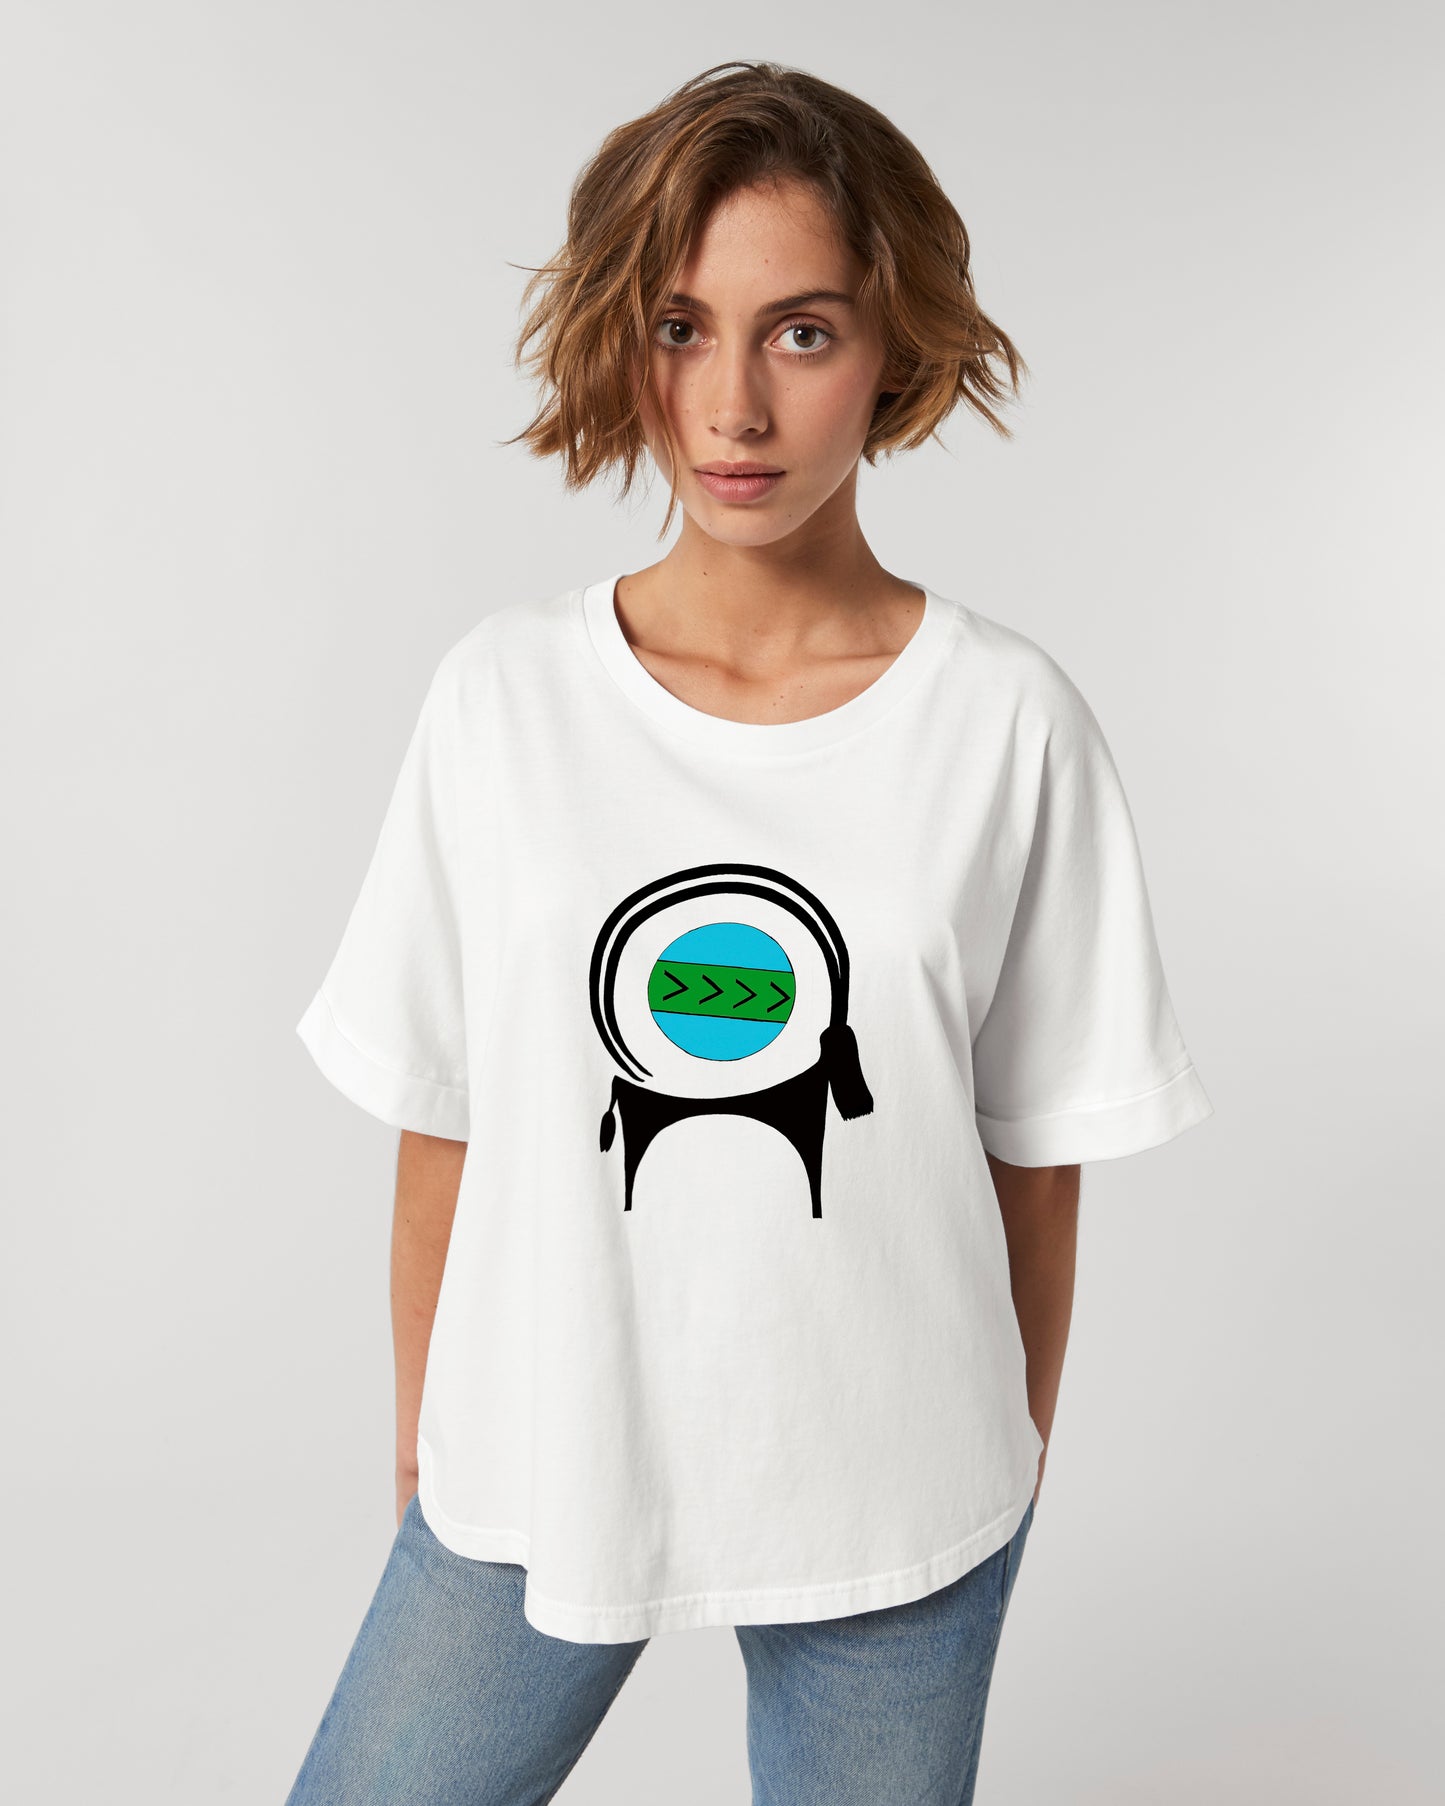 CAPRA-Vintage Over-sized T-shirt , Vegan T-shirt in Cotton